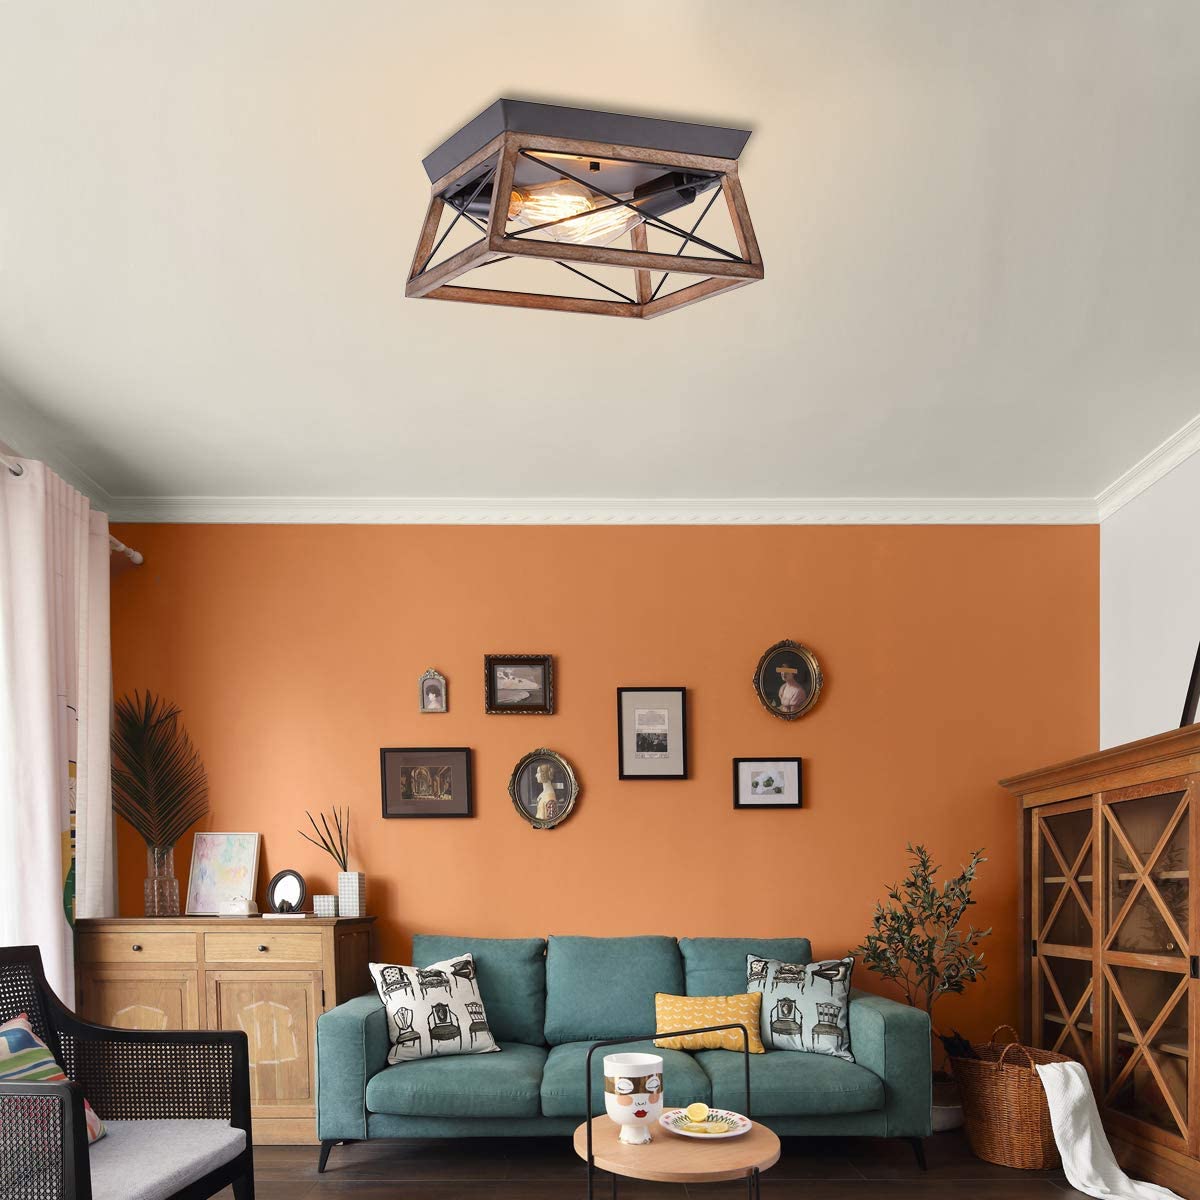 Ceiling-Light-Fixtures-Adjustable-Wall-Mounted-Lamp-Holder-Bedroom-Living-Room-1841319-1